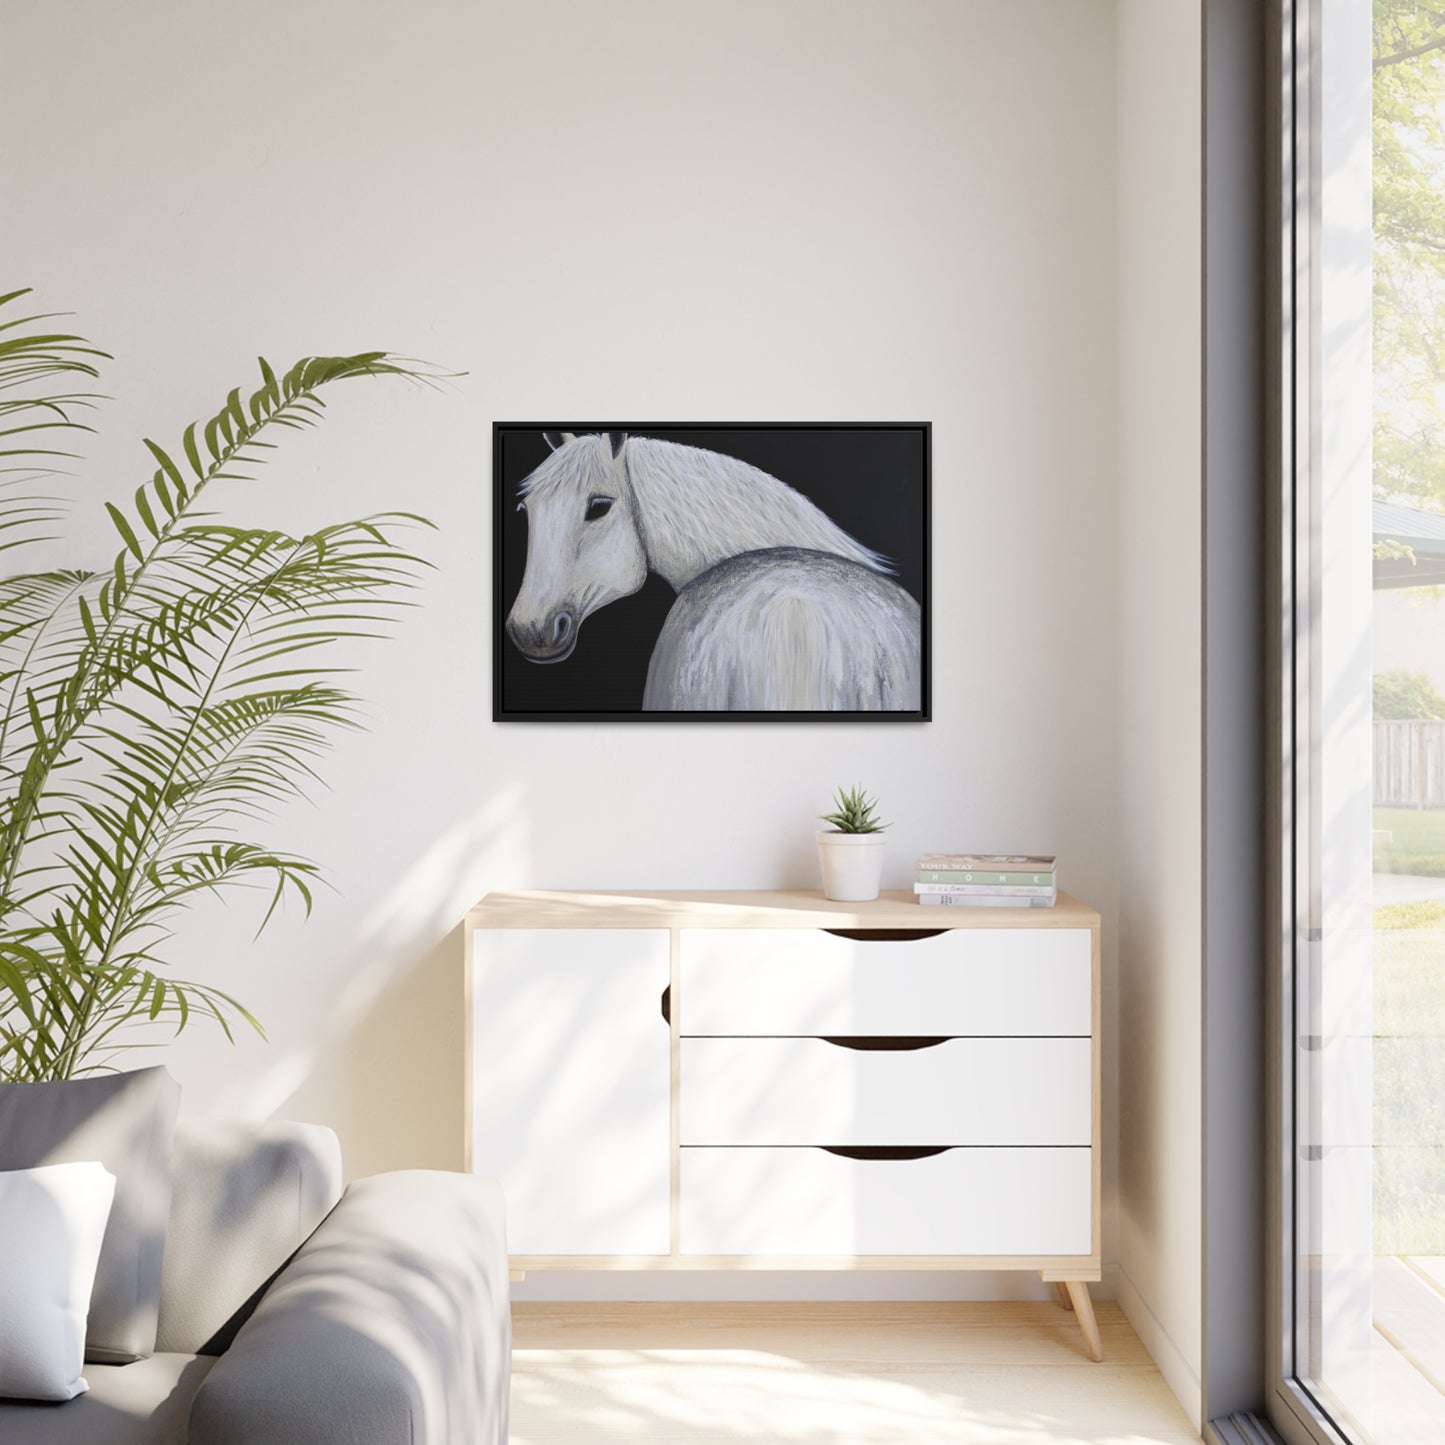 Framed wall Art - framed Art - Wall Canvas - Wall Art - Ghost, Equestrian art painting